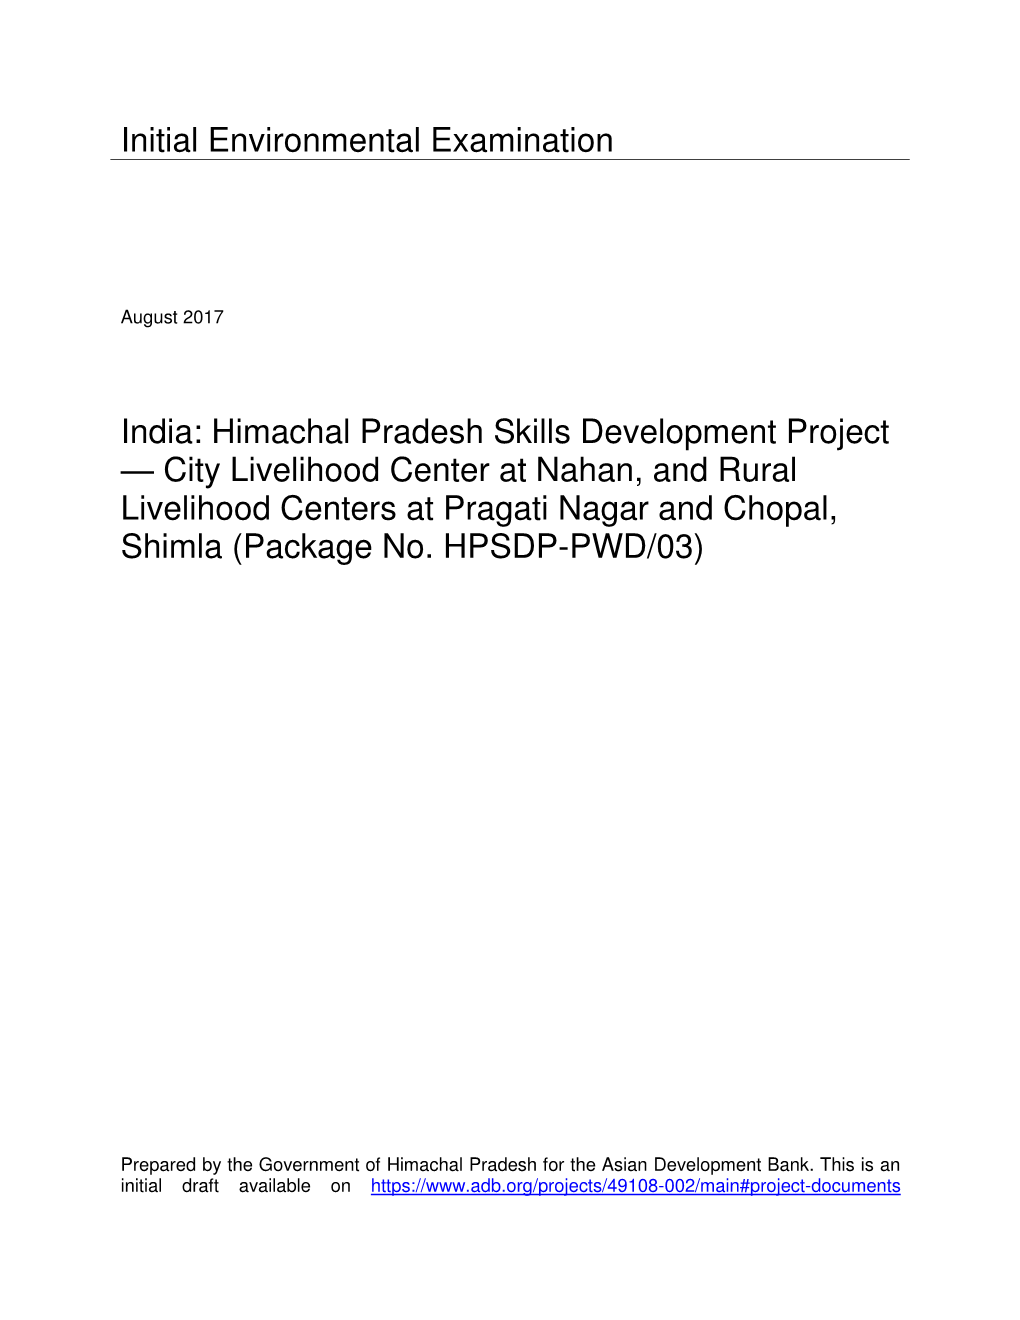 Himachal Pradesh Skills Development Project — City Livelihood Center at Nahan, and Rural Livelihood Centers at Pragati Nagar and Chopal, Shimla (Package No